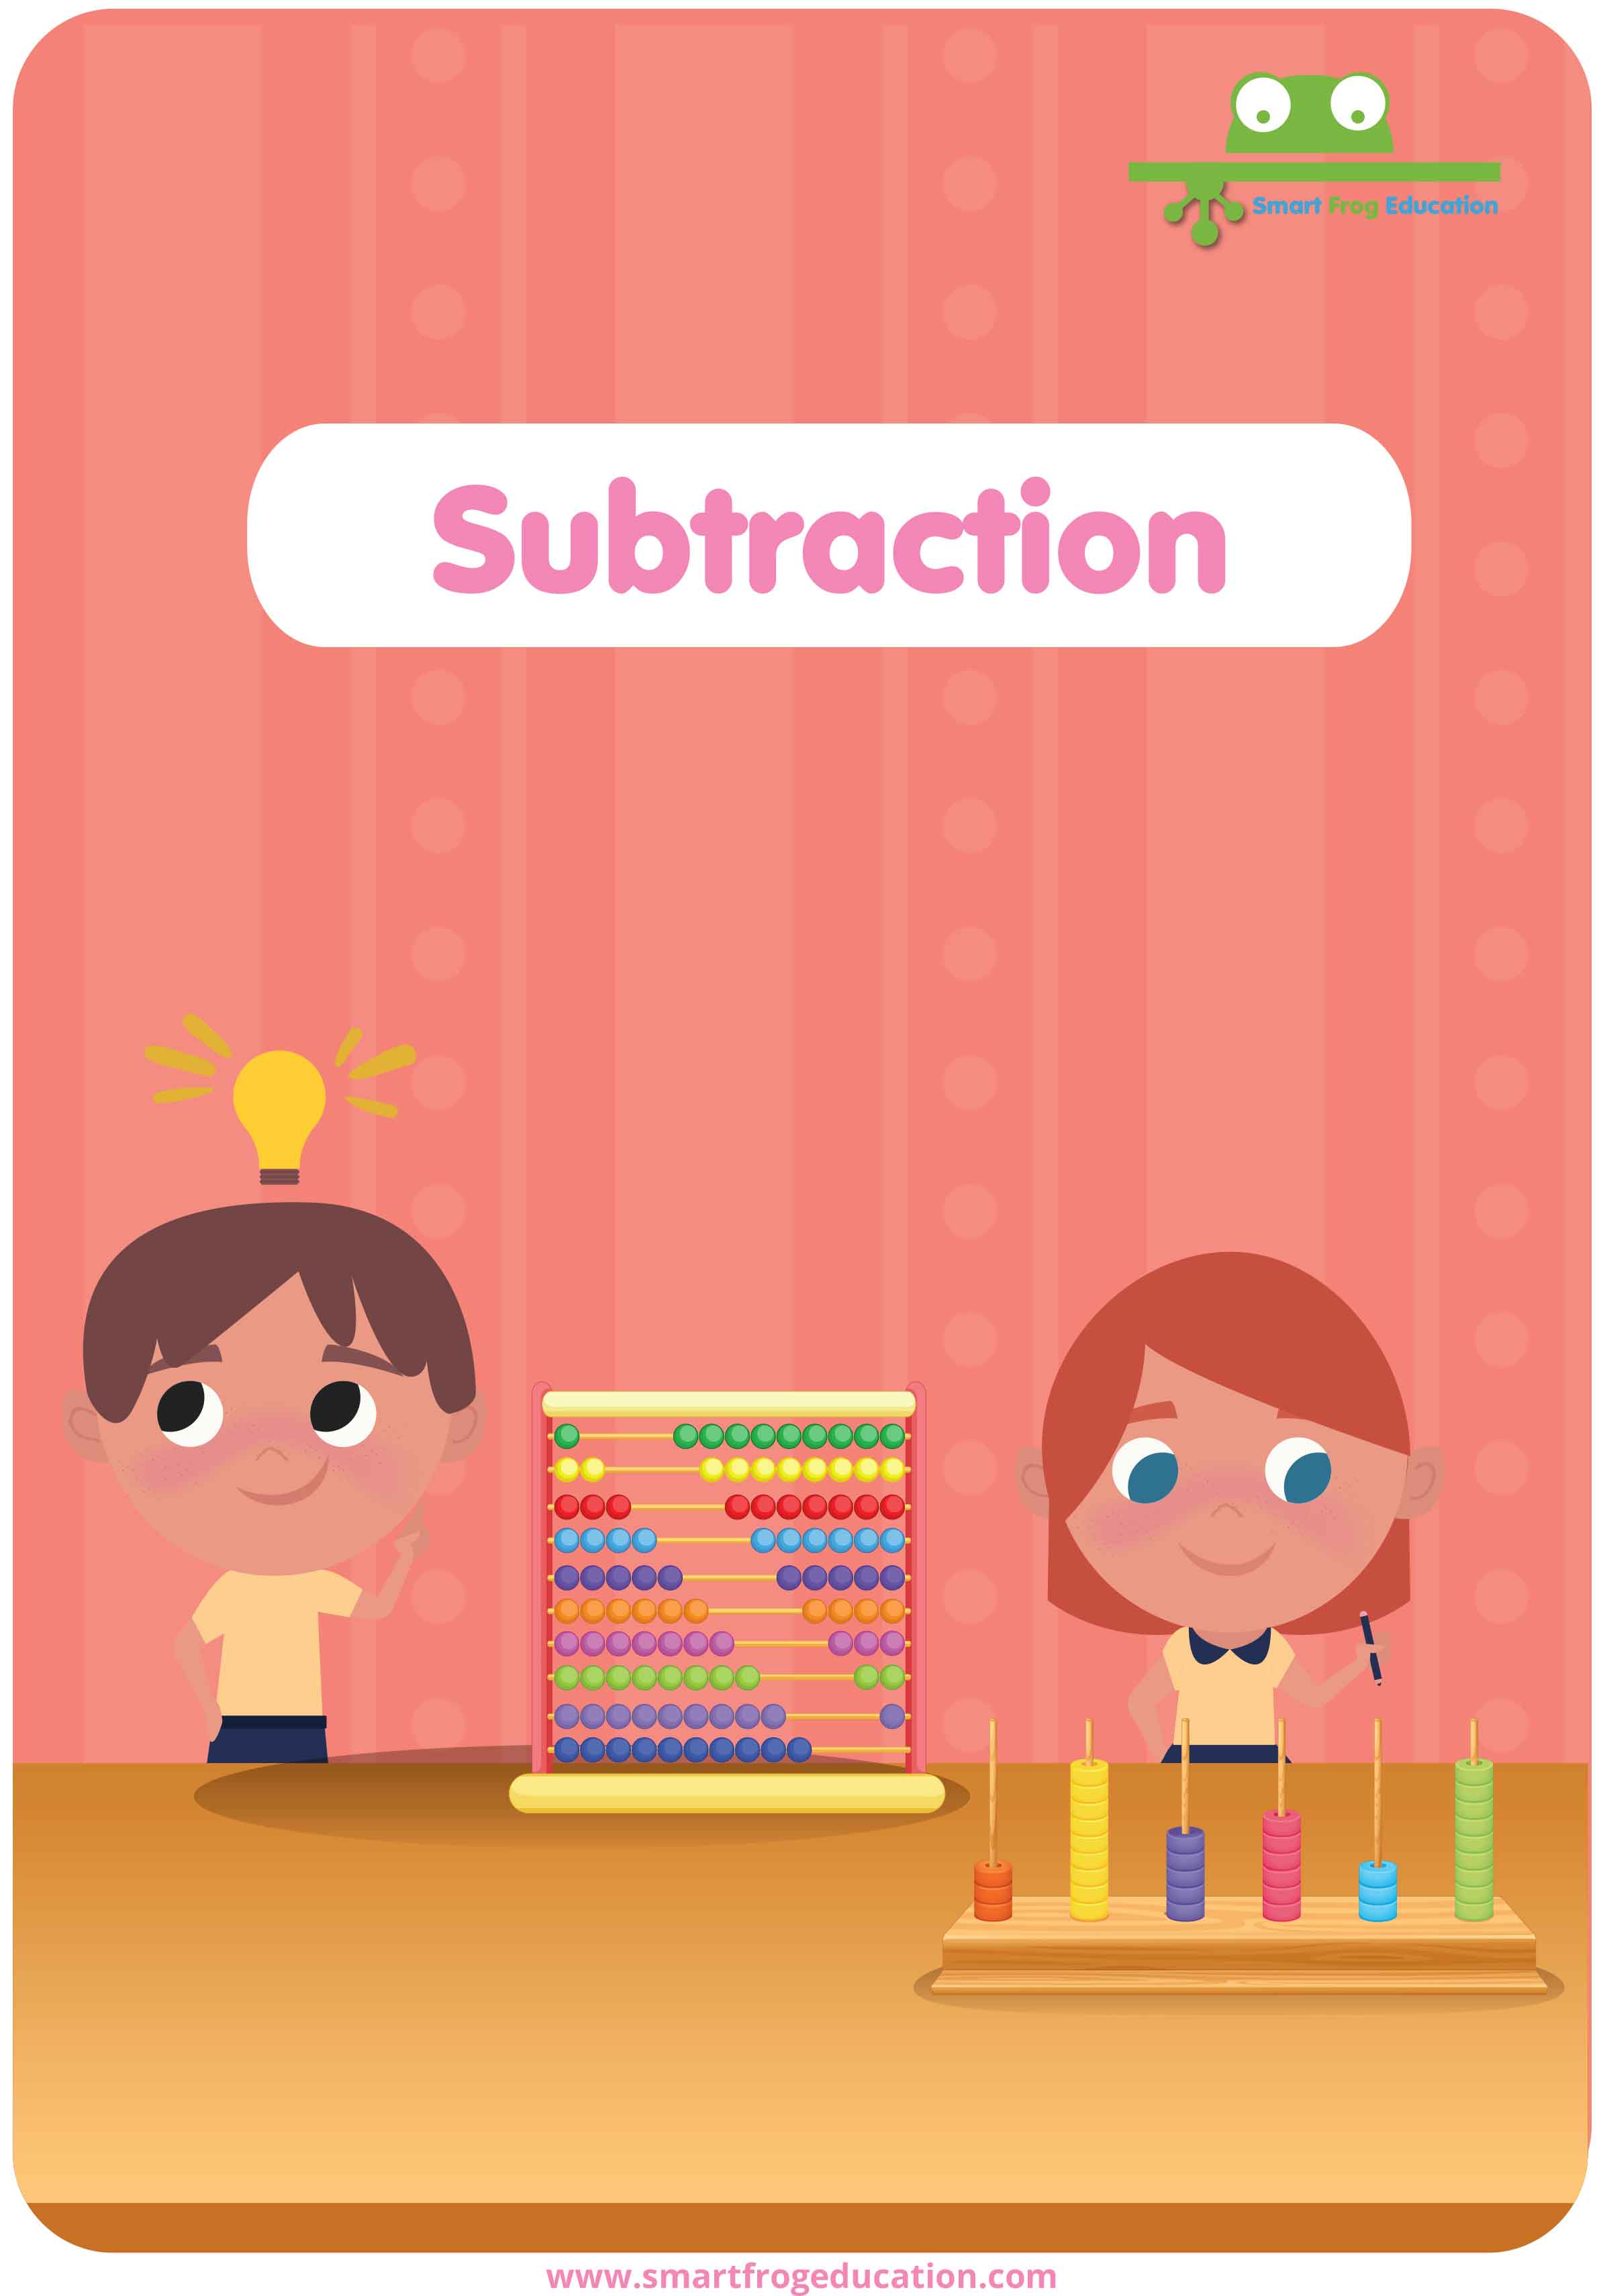 Subtraction 